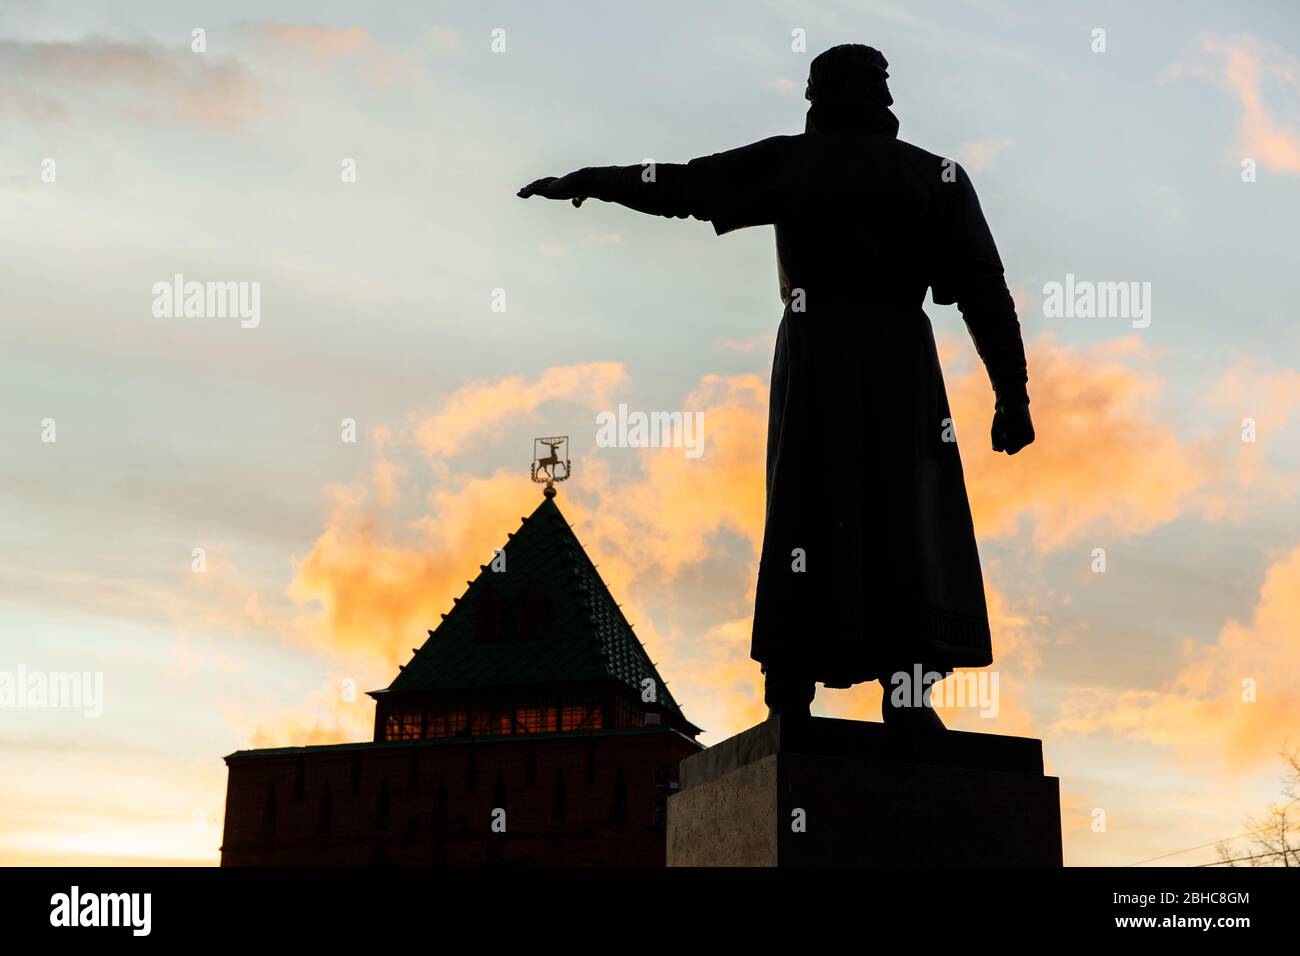 Kuzma Minin monument and Tower of Demetrius or Dmitrovskaya tower in the Nizhny Novgorod Kremlin.  Stock Photo